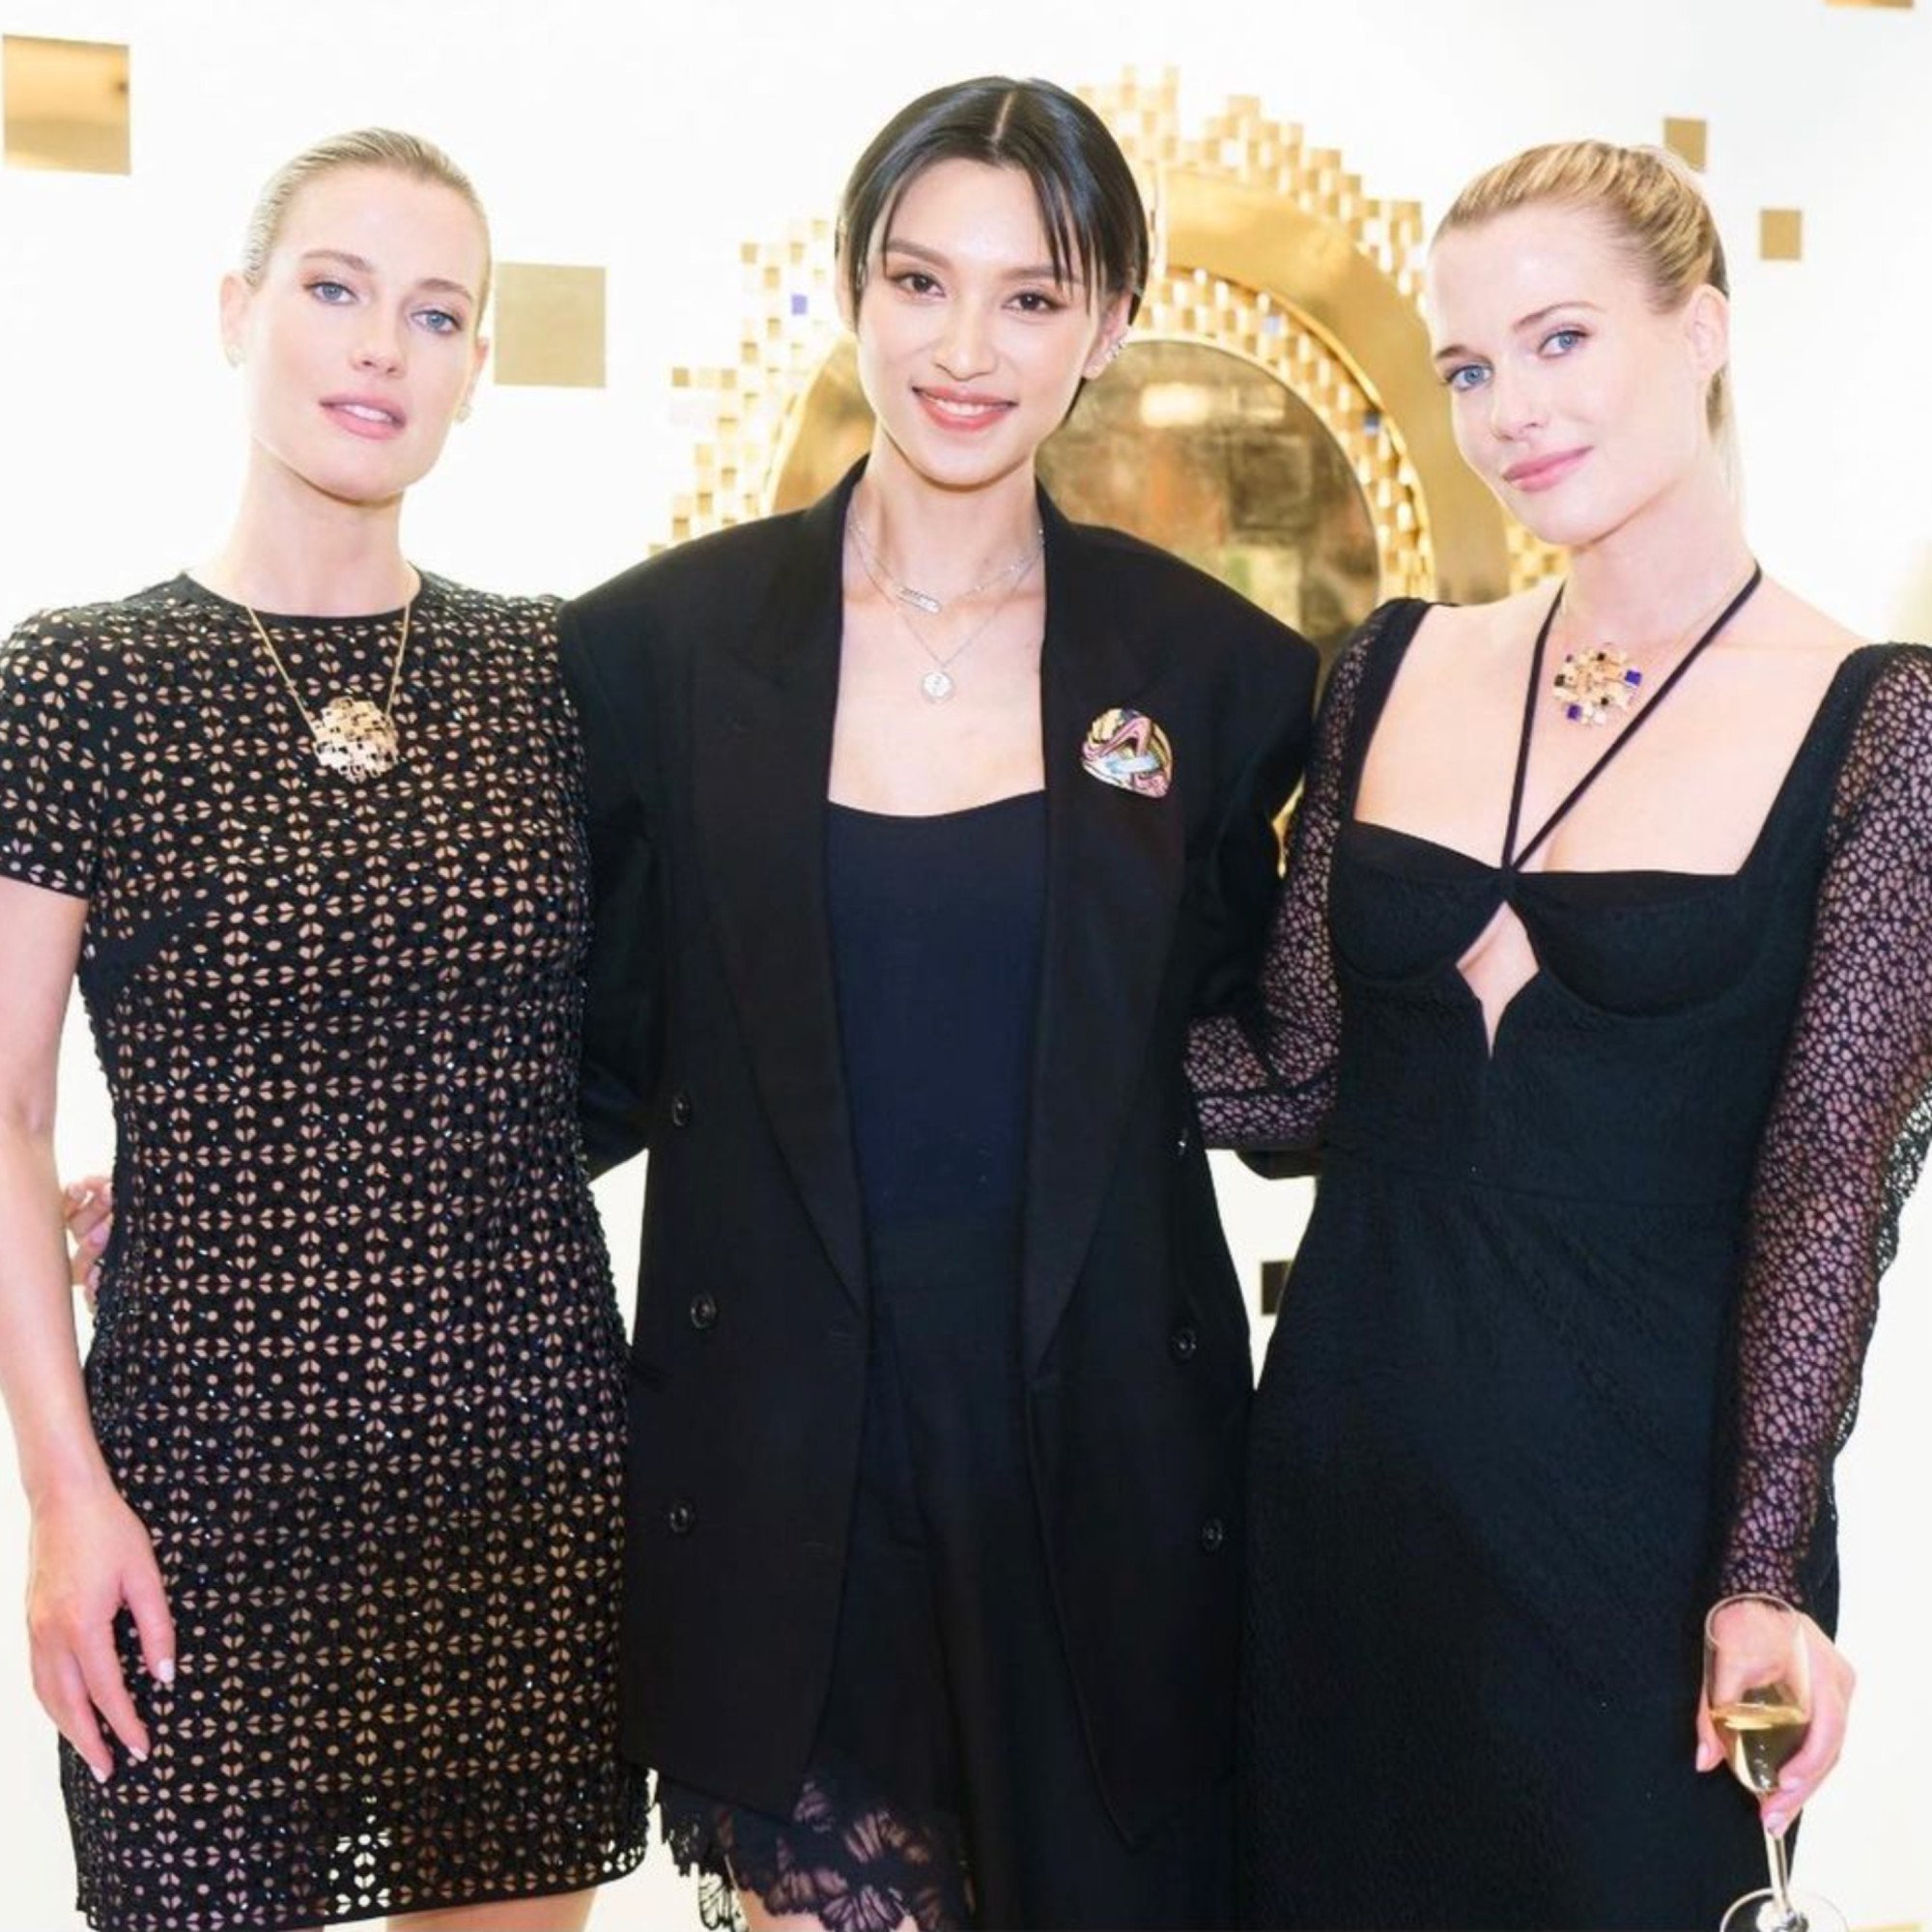 LVMH boss Bernard Arnault's visit highlights growing importance of huge  mainland Chinese market for luxury brands